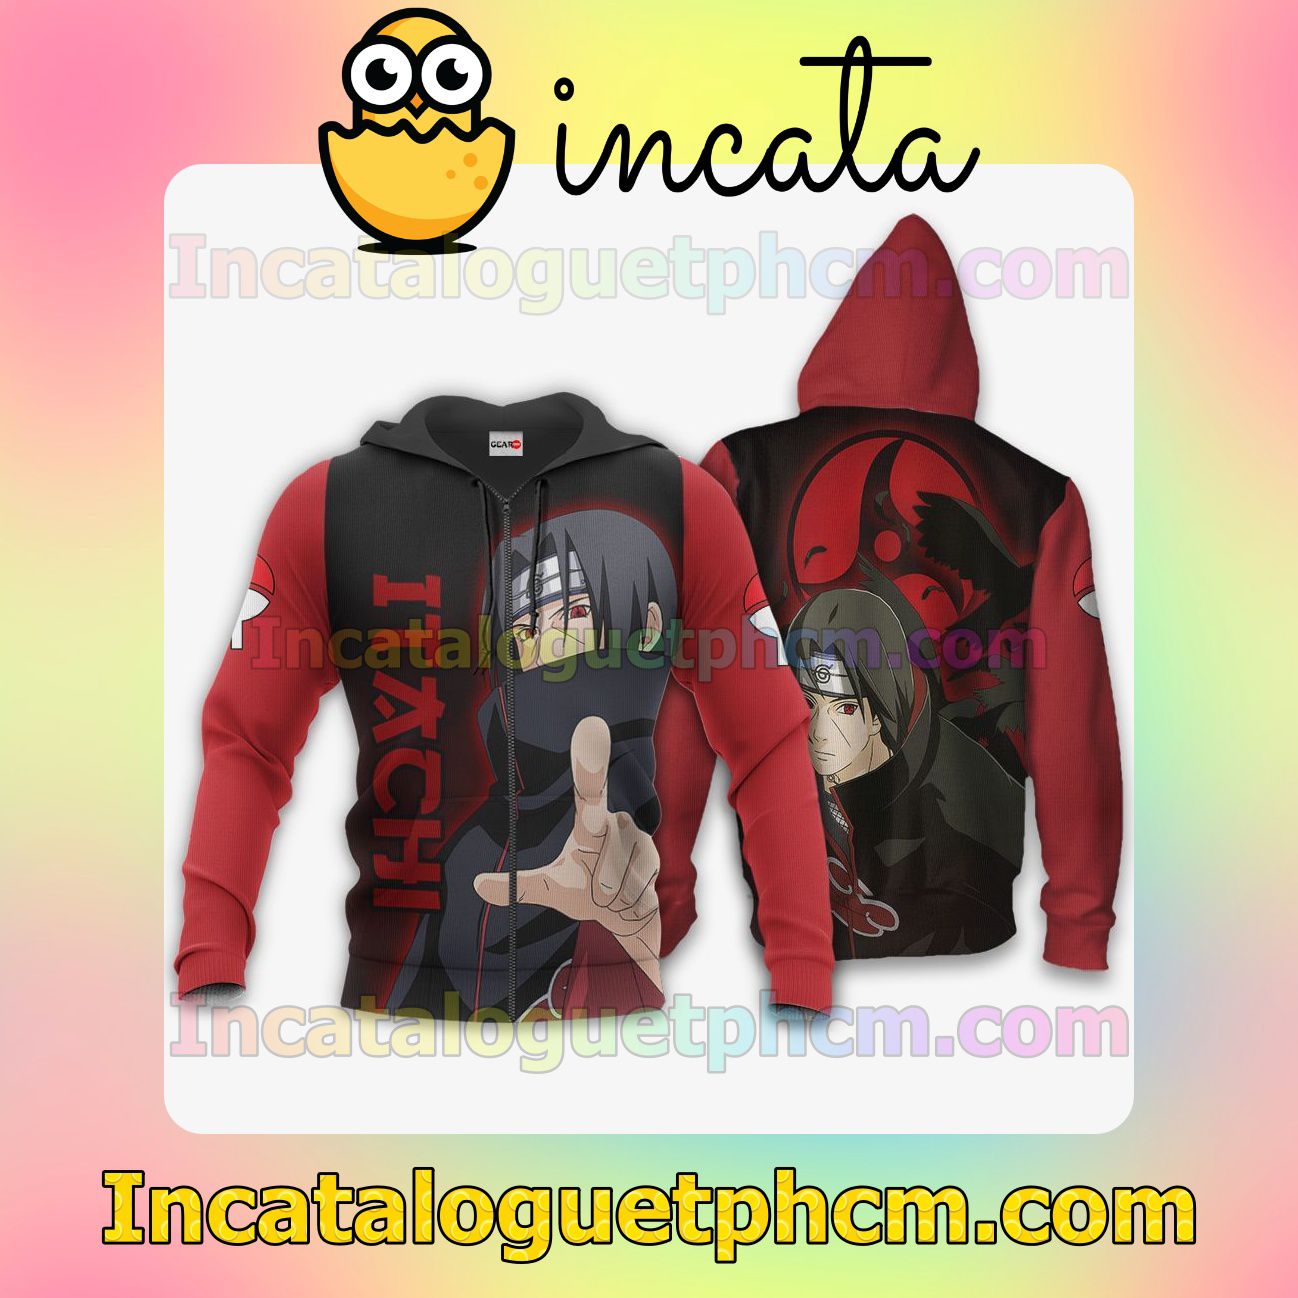 Uchiha Itachi Sharingan Eyes Naruto Anime Clothing Merch Zip Hoodie Jacket Shirts